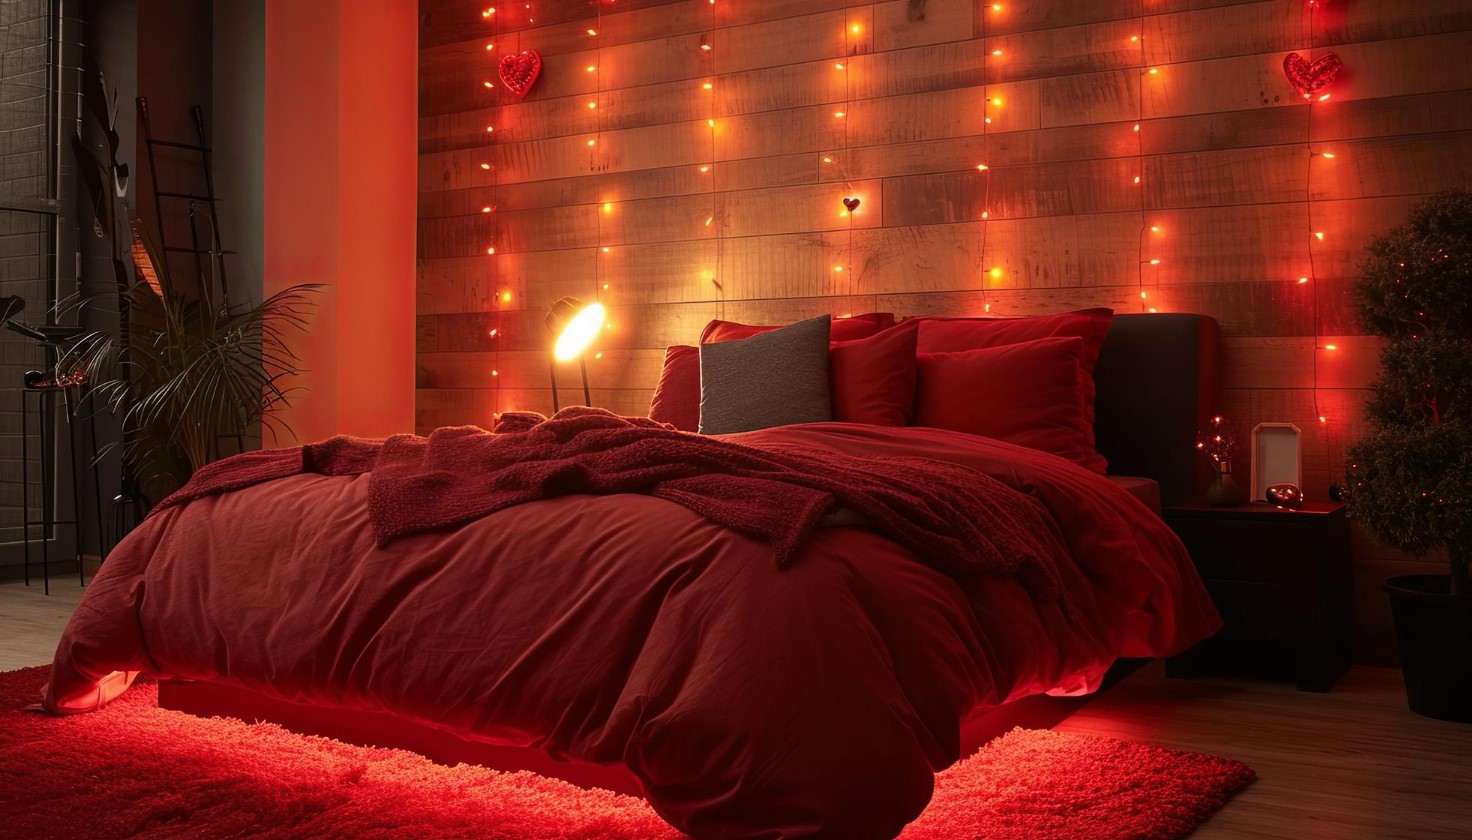 Best LED light color for sleeping